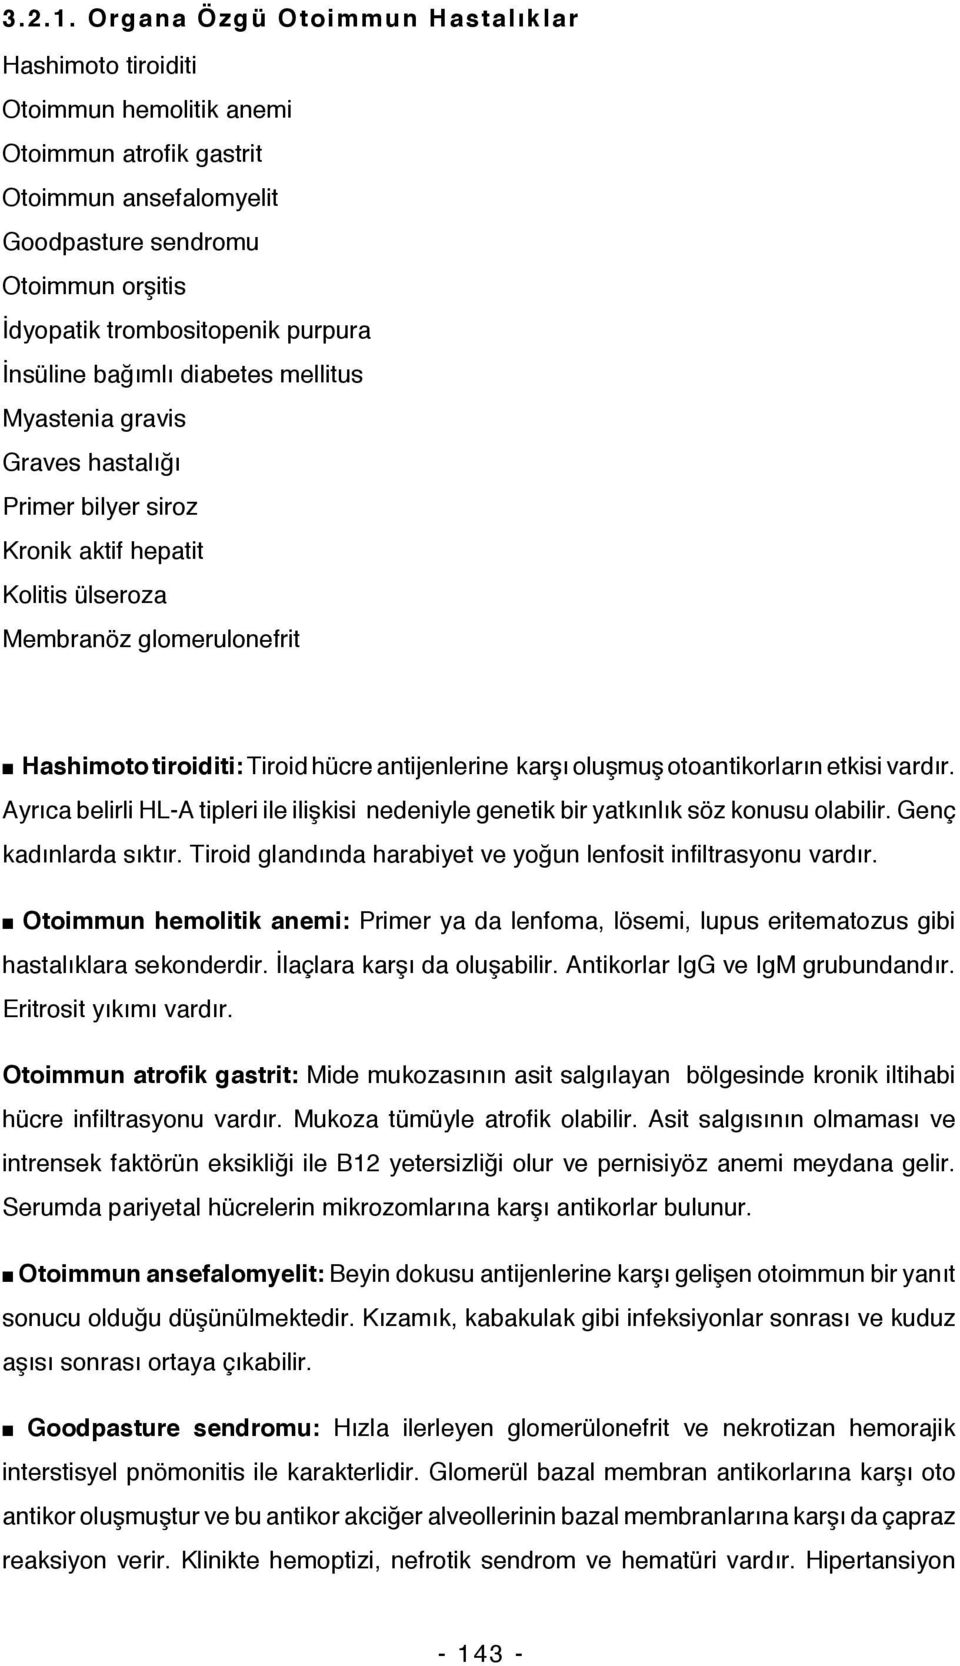 İnsüline bağımlı diabetes mellitus Myastenia gravis Graves hastalığı Primer bilyer siroz Kronik aktif hepatit Kolitis ülseroza Membranöz glomerulonefrit Hashimoto tiroiditi: Tiroid hücre